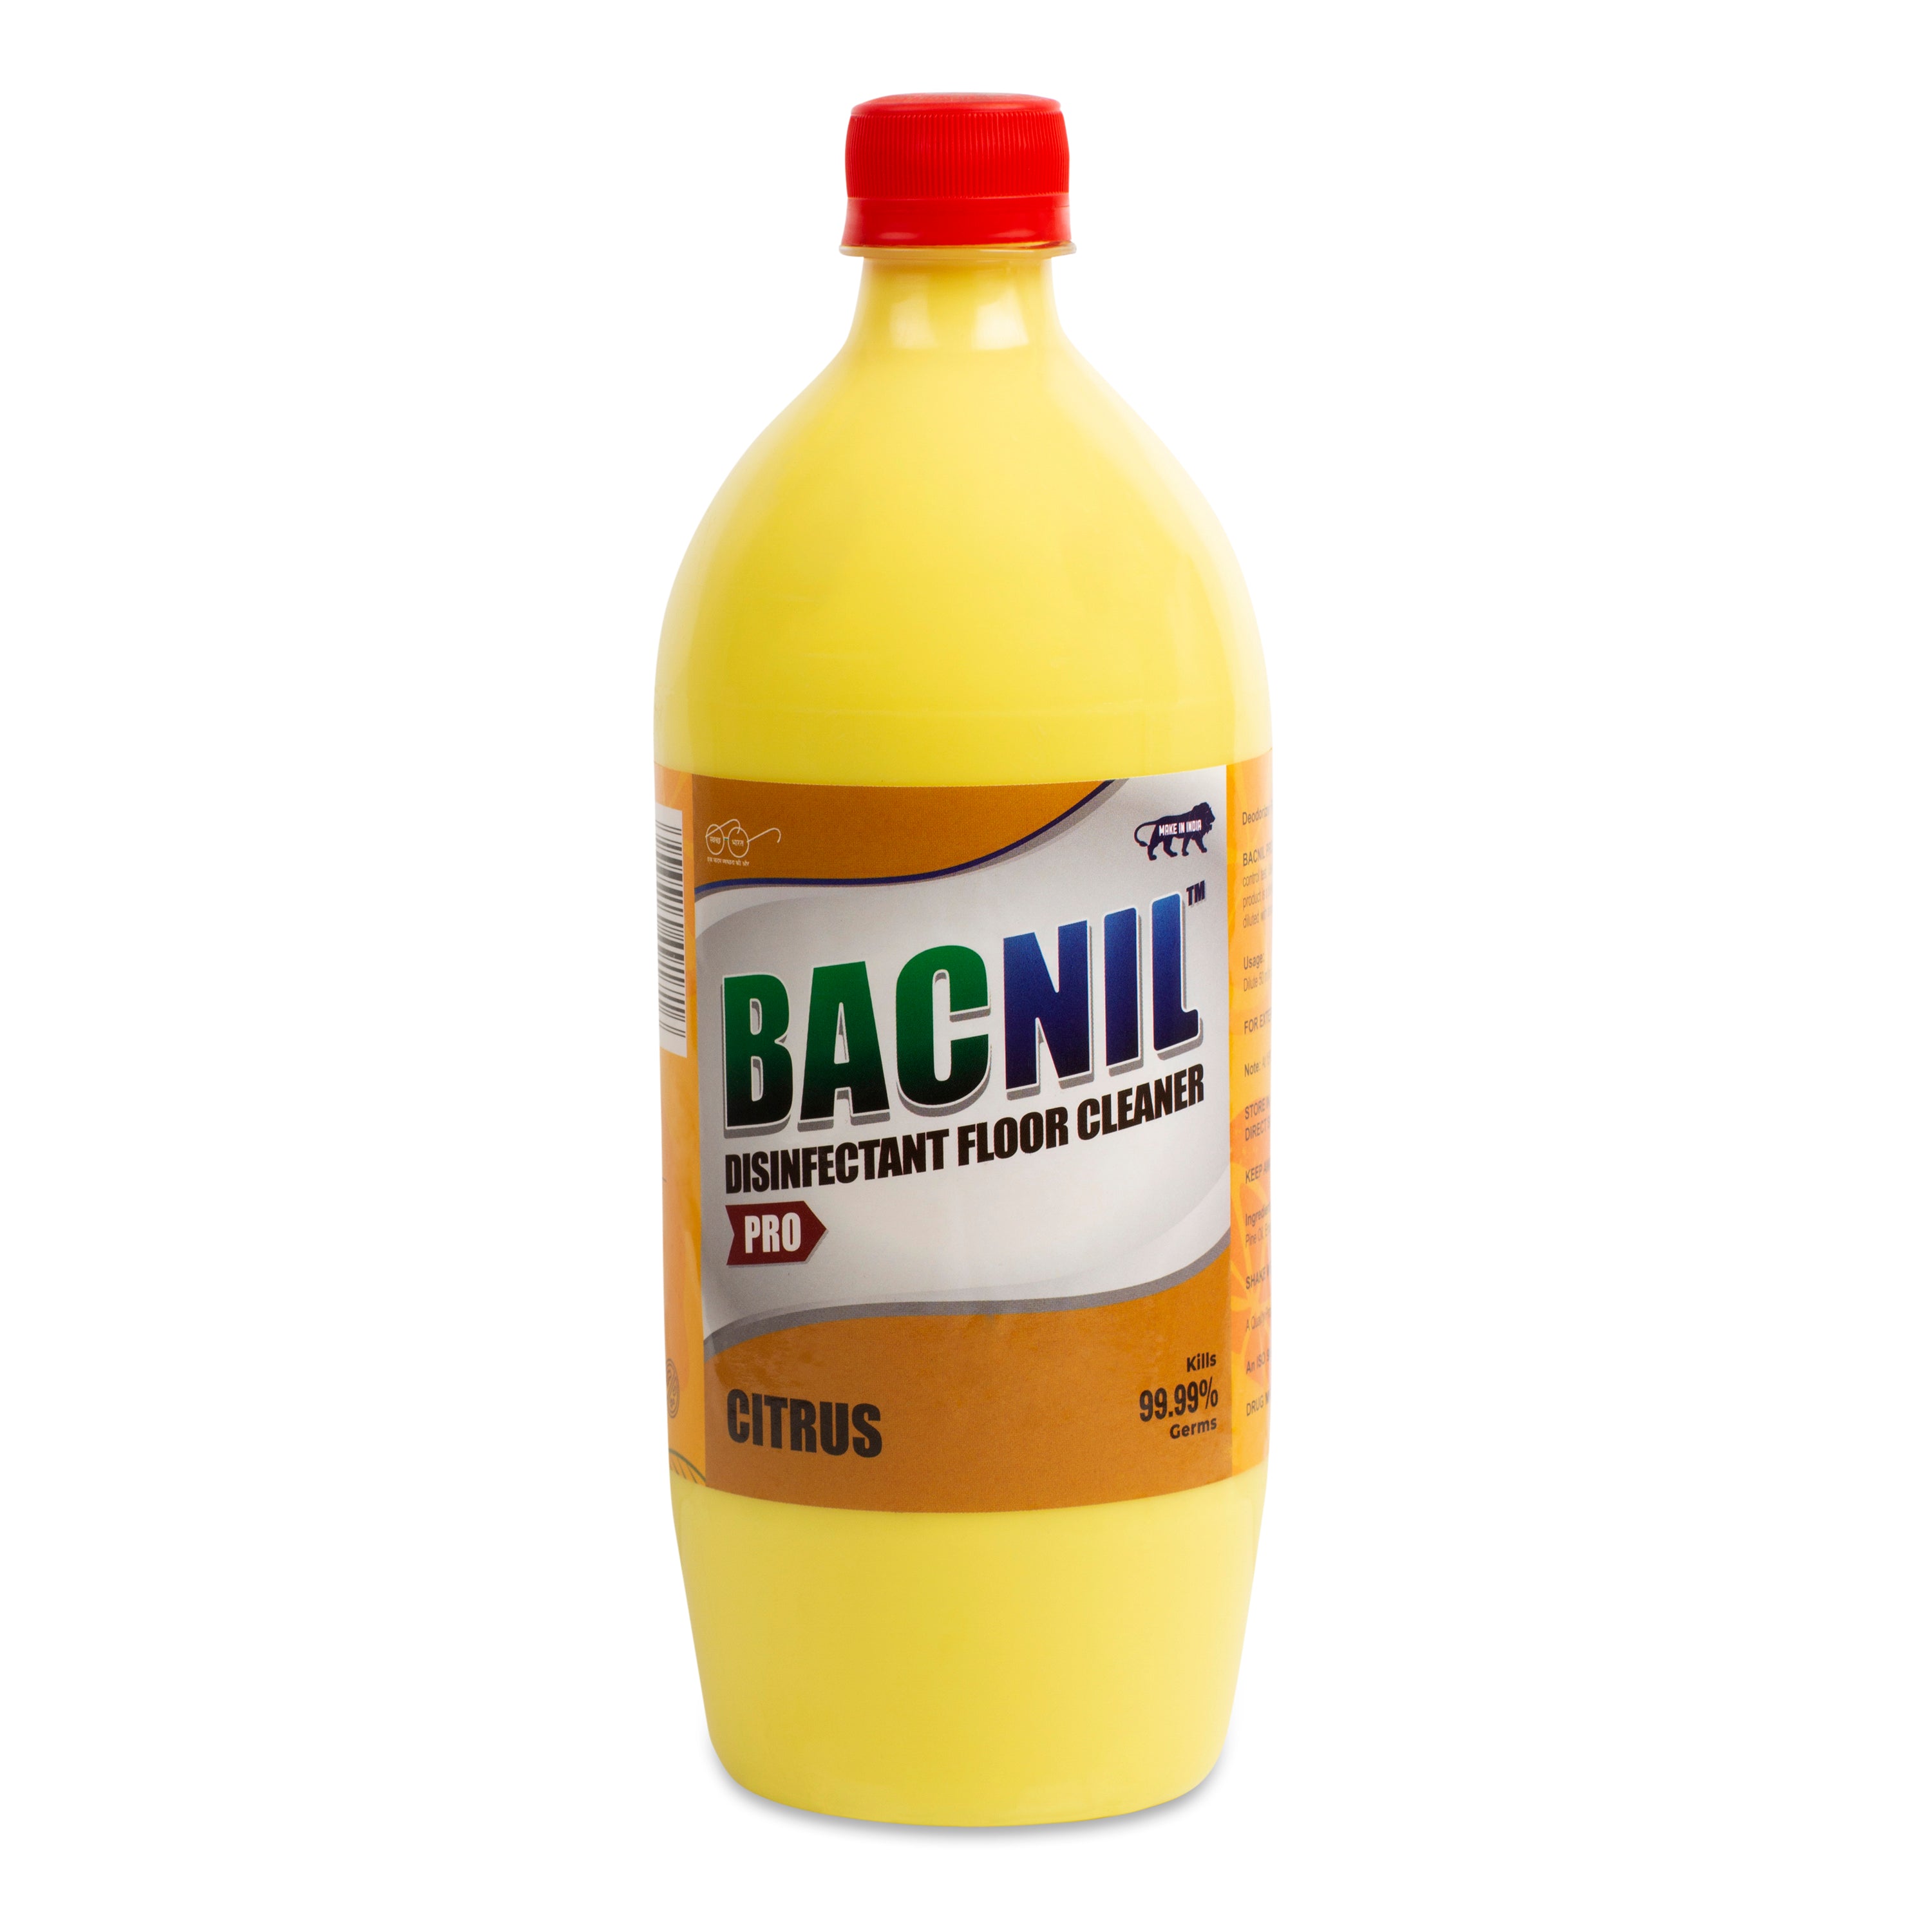 Bacnil Pro - Citrus Floor Cleaner